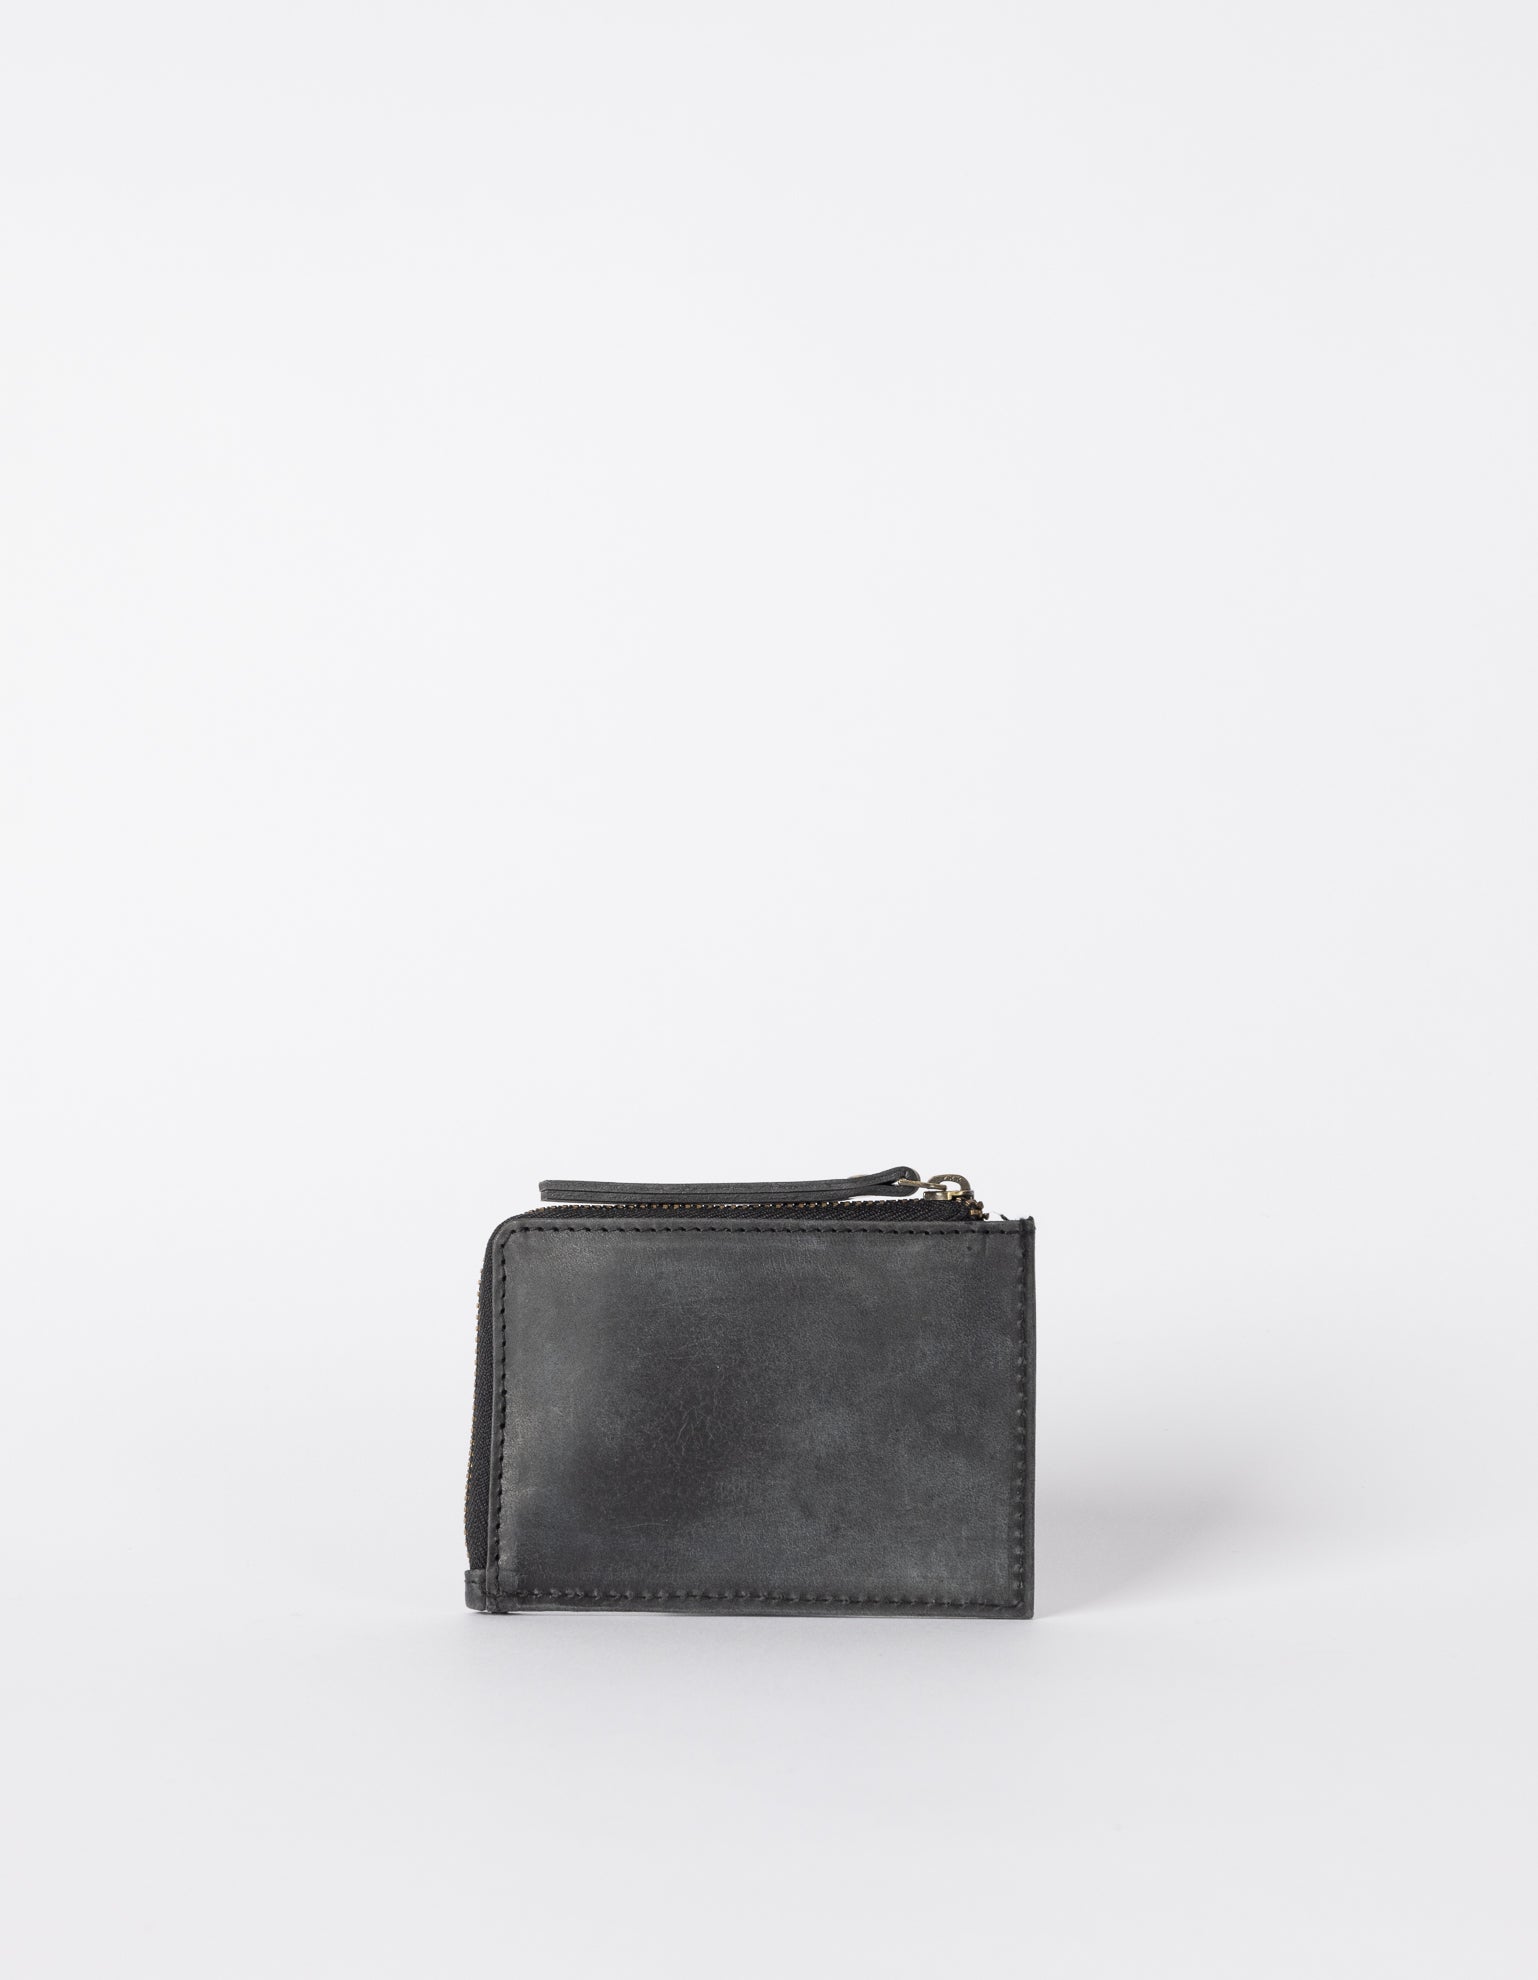 Small Black Hunter Leather coin purse. Square shape. Back image